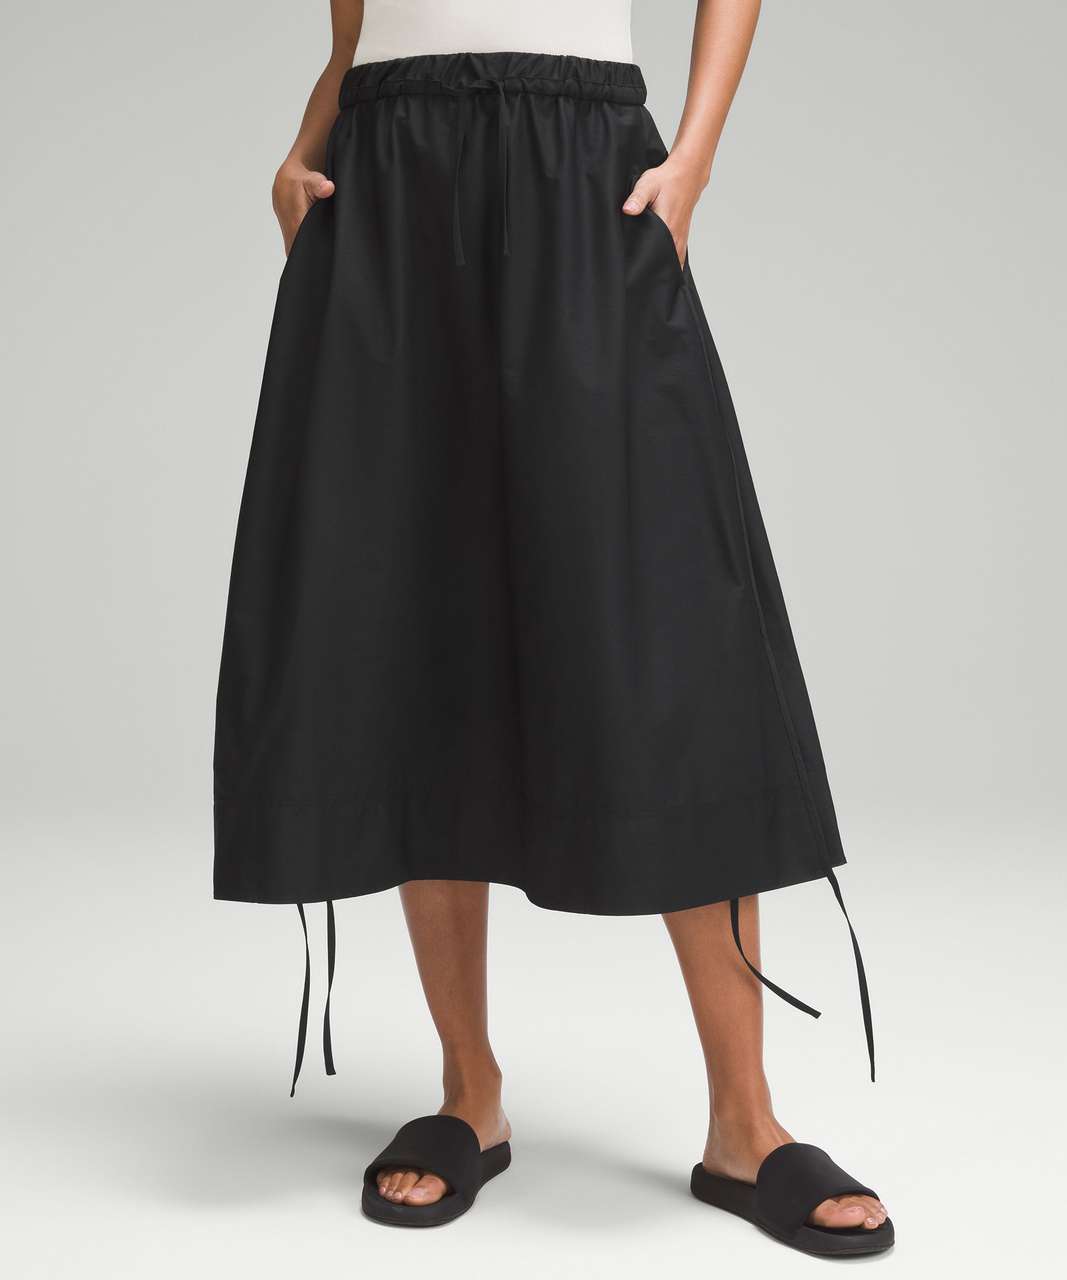 Lululemon High-Low Side Slit Super-High-Rise Skirt - Black